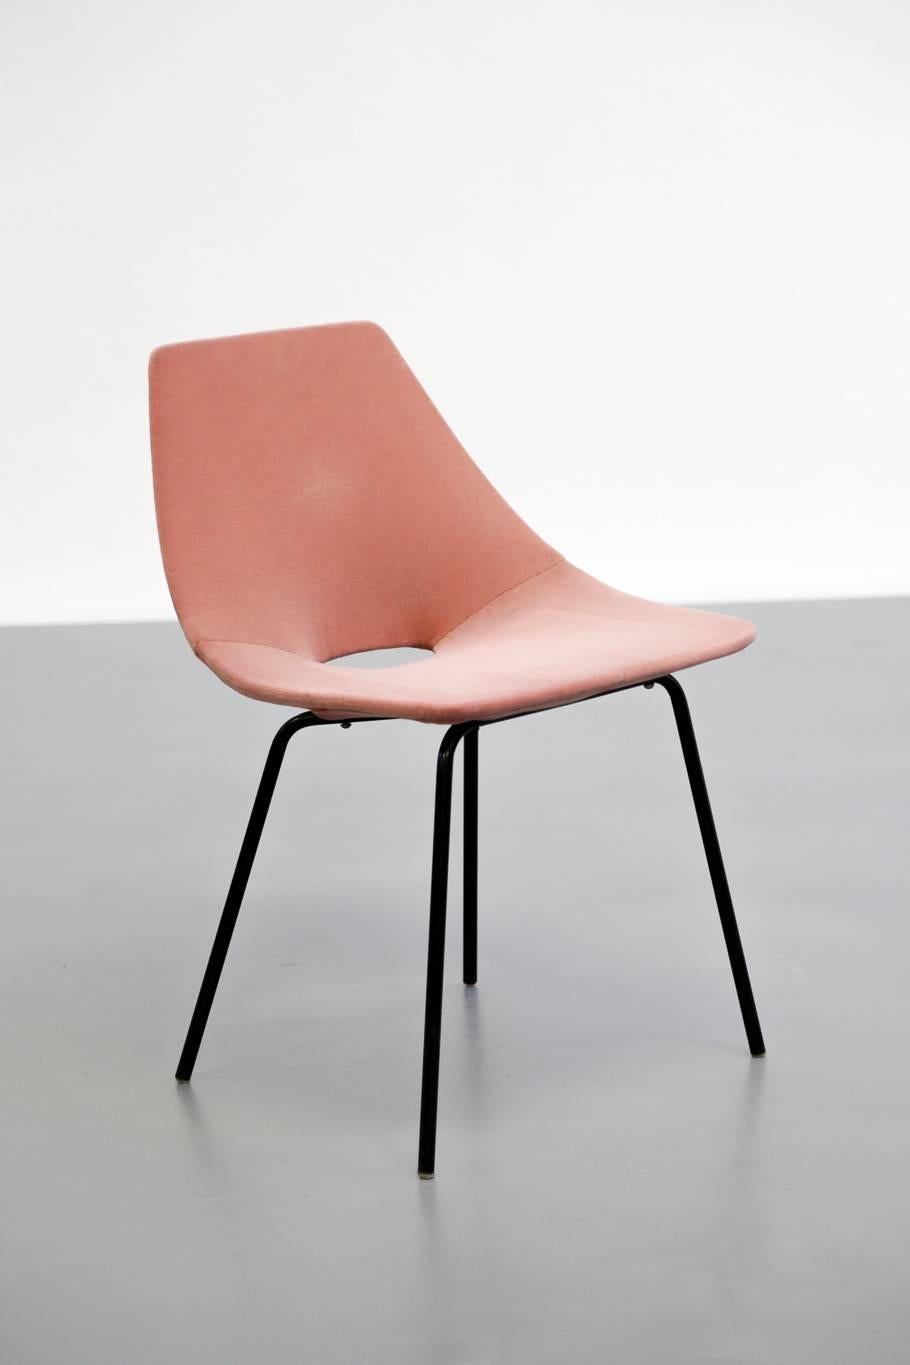 20th Century Tonneau Chair by Pierre Guariche for Steiner